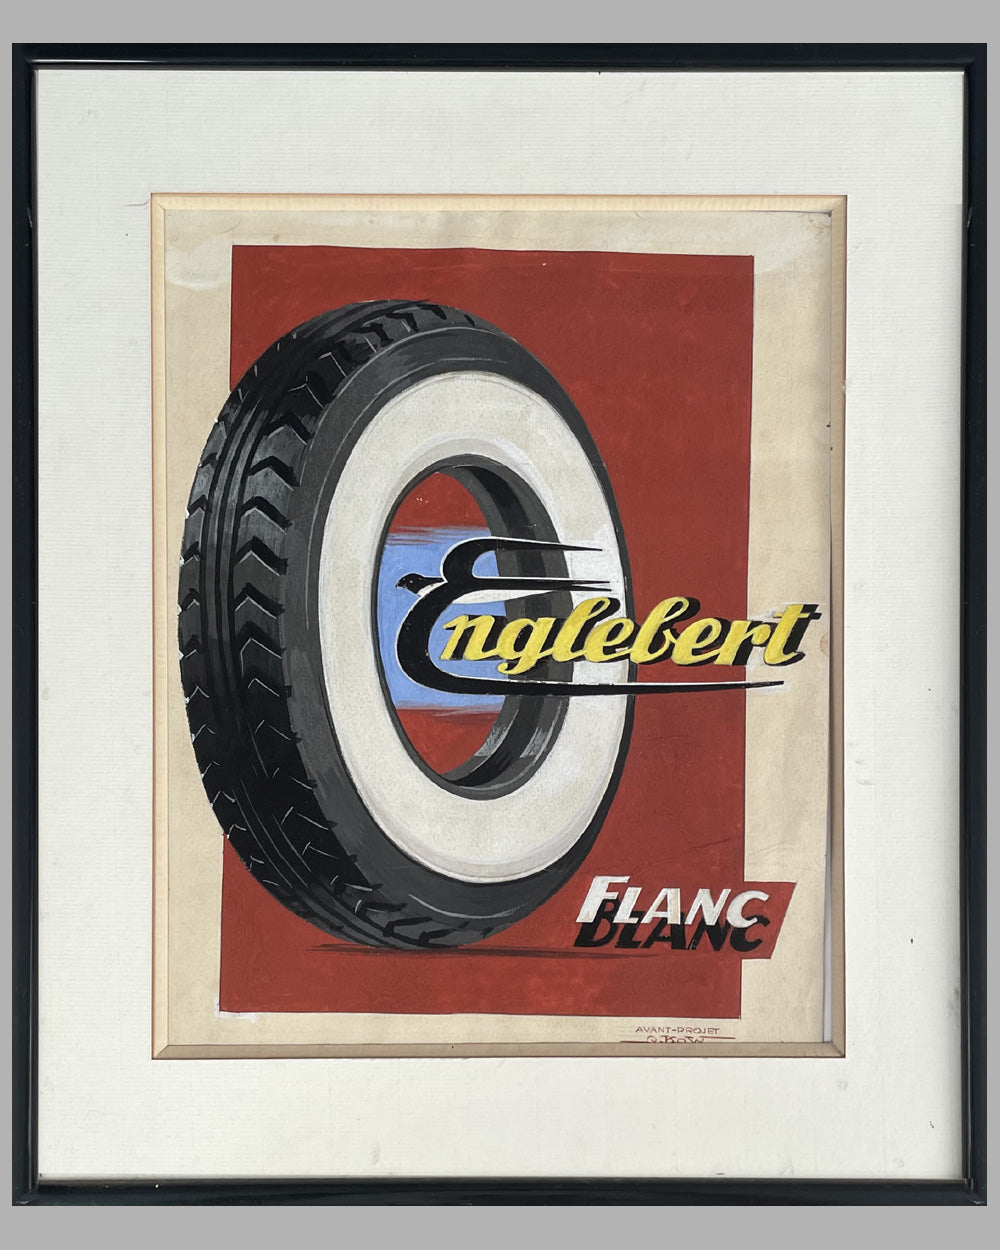 Englebert Tires period artwork by Alexis Kow (1901-1978)